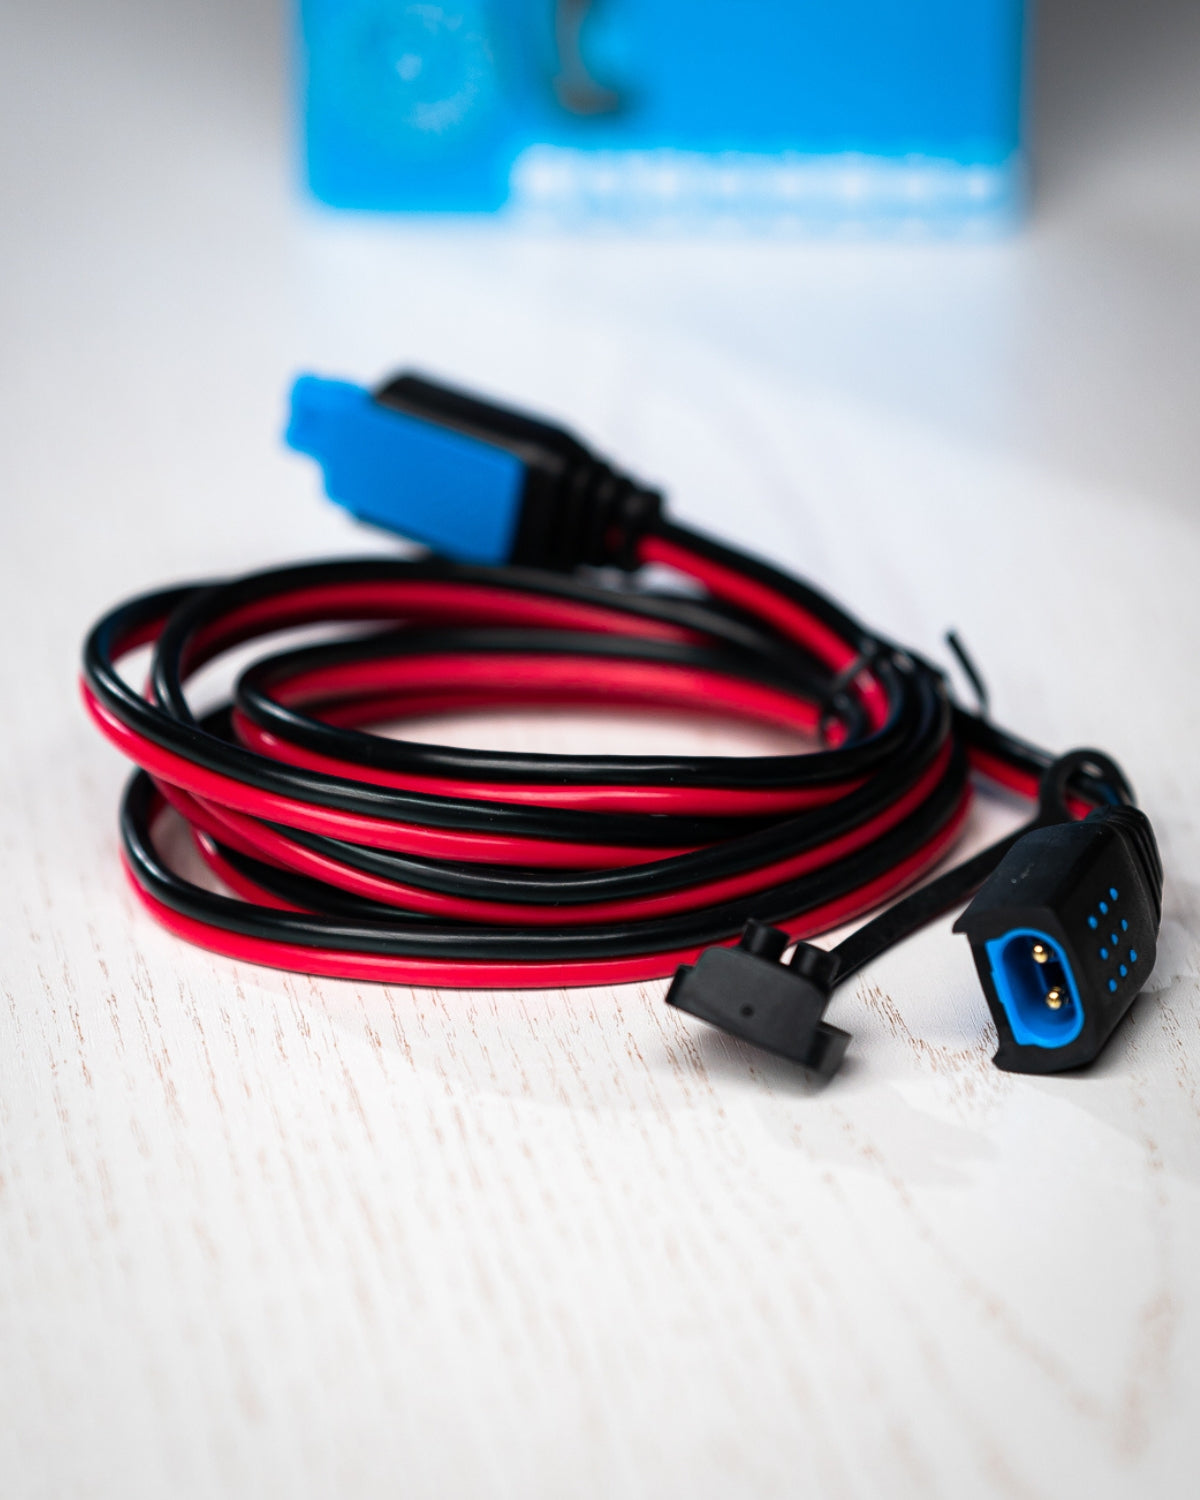 Cablu Prelungitor Redresor Victron Blue Smart, 2 Metri